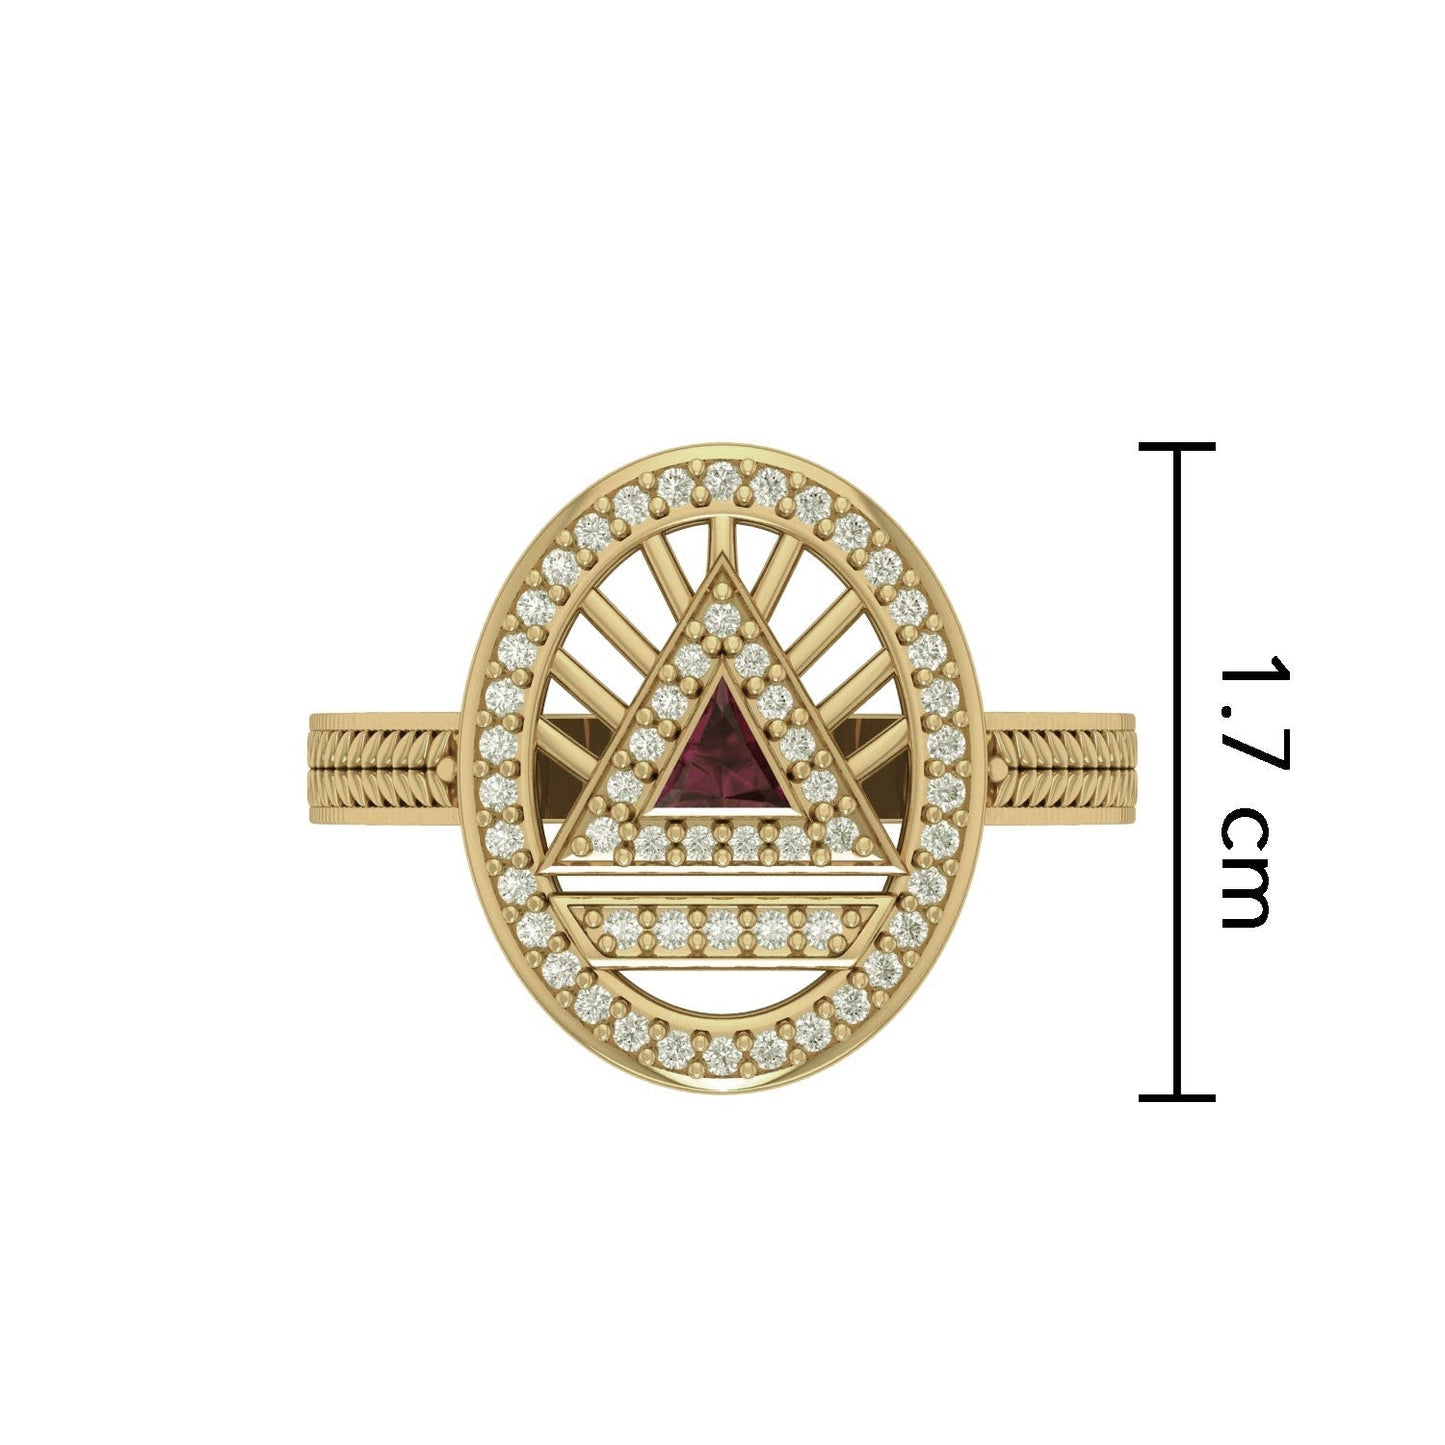 Gold Elegant System Ring